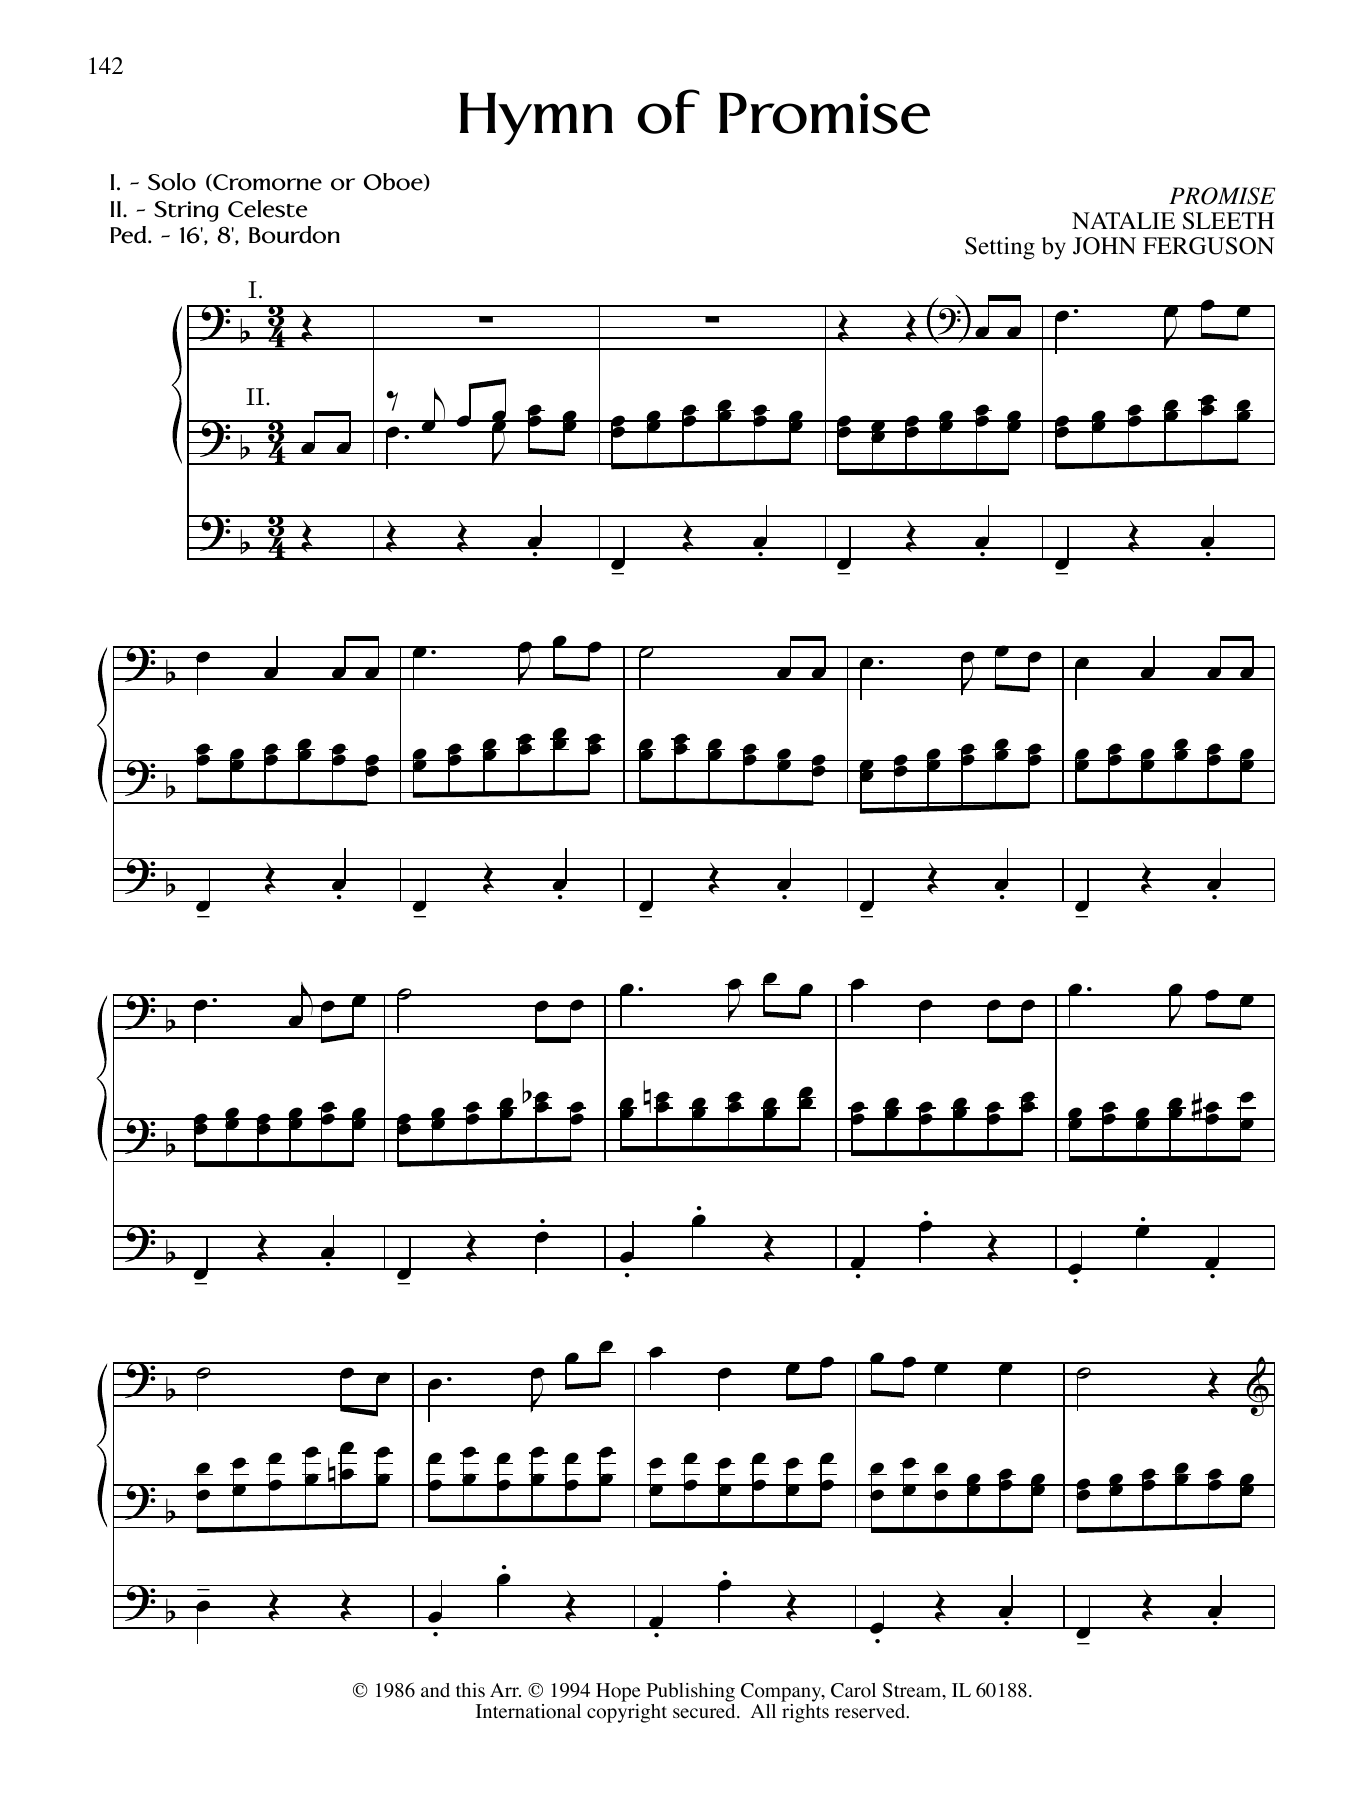 JOHN FERGUSON Hymn of Promise sheet music notes and chords arranged for Organ